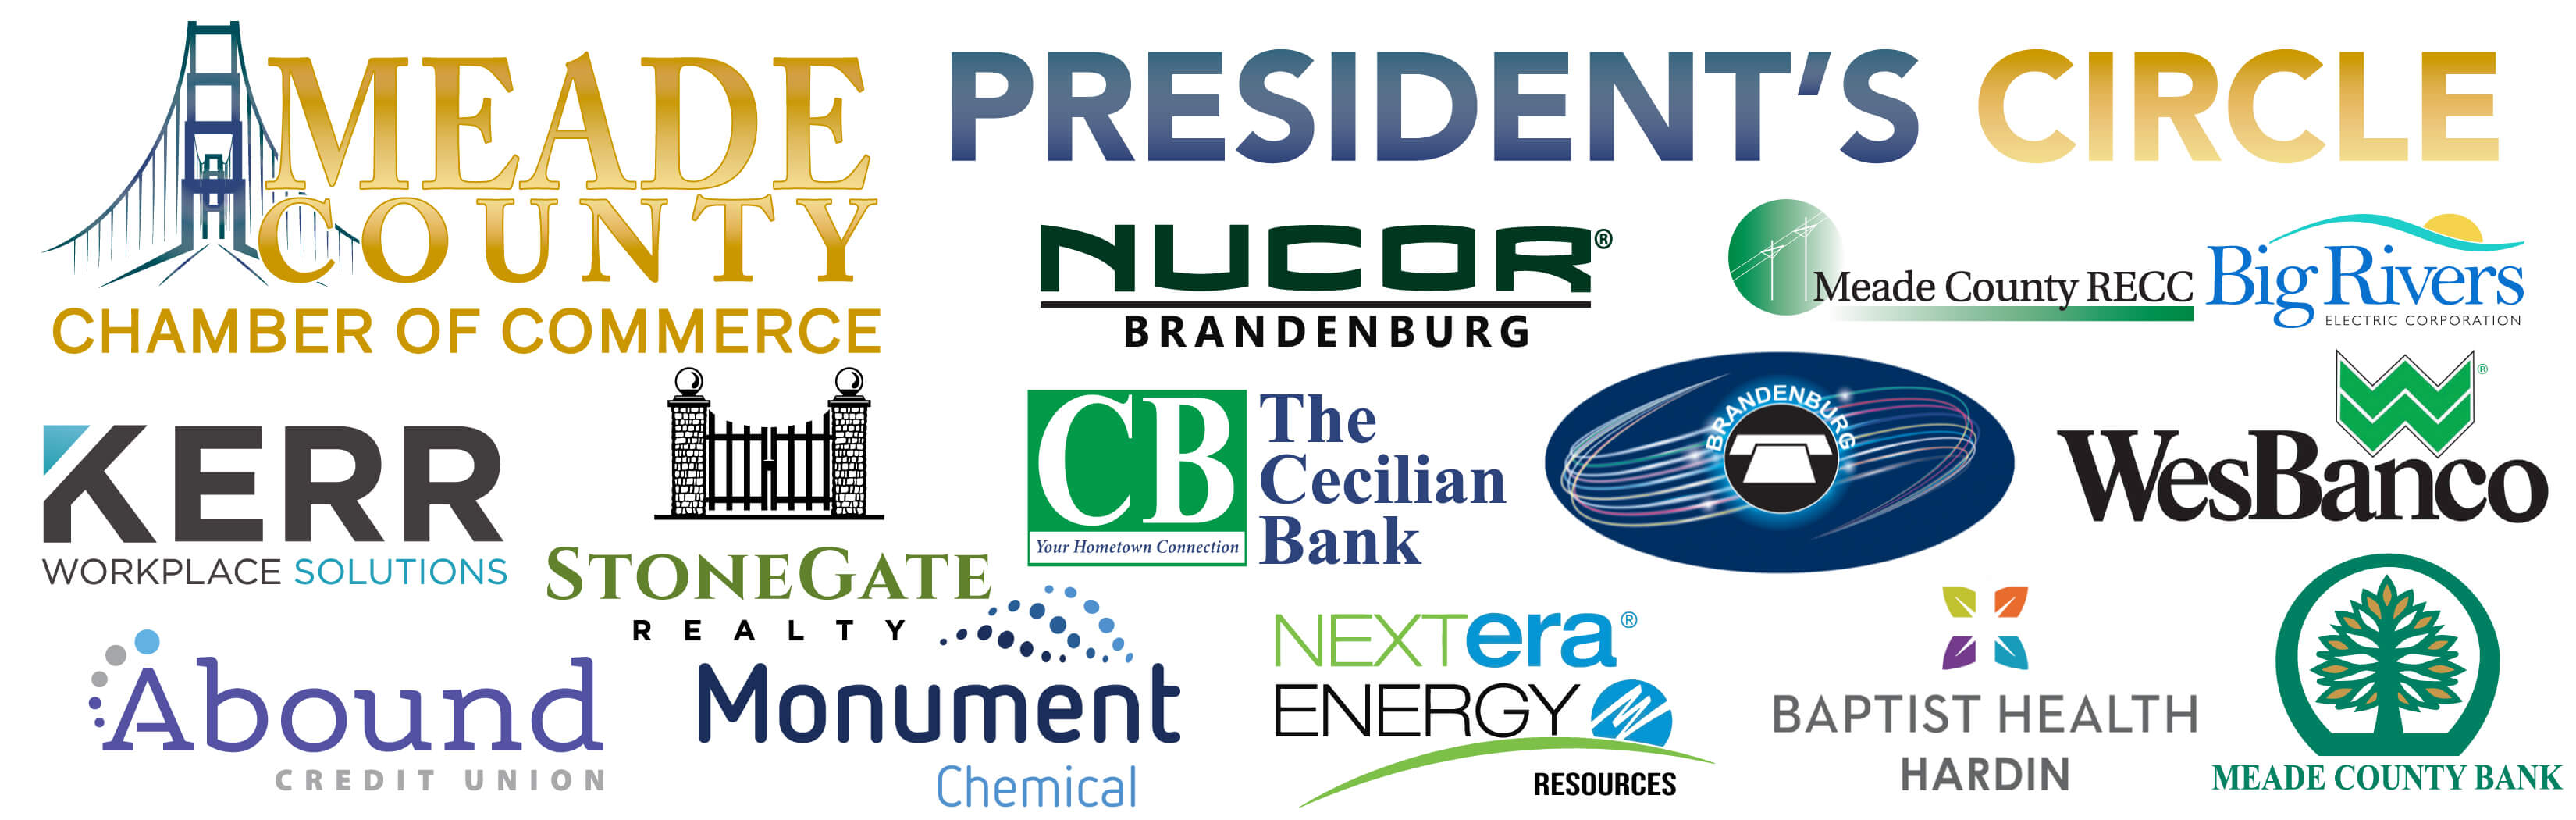 2022 New Presidents Circle logo collage